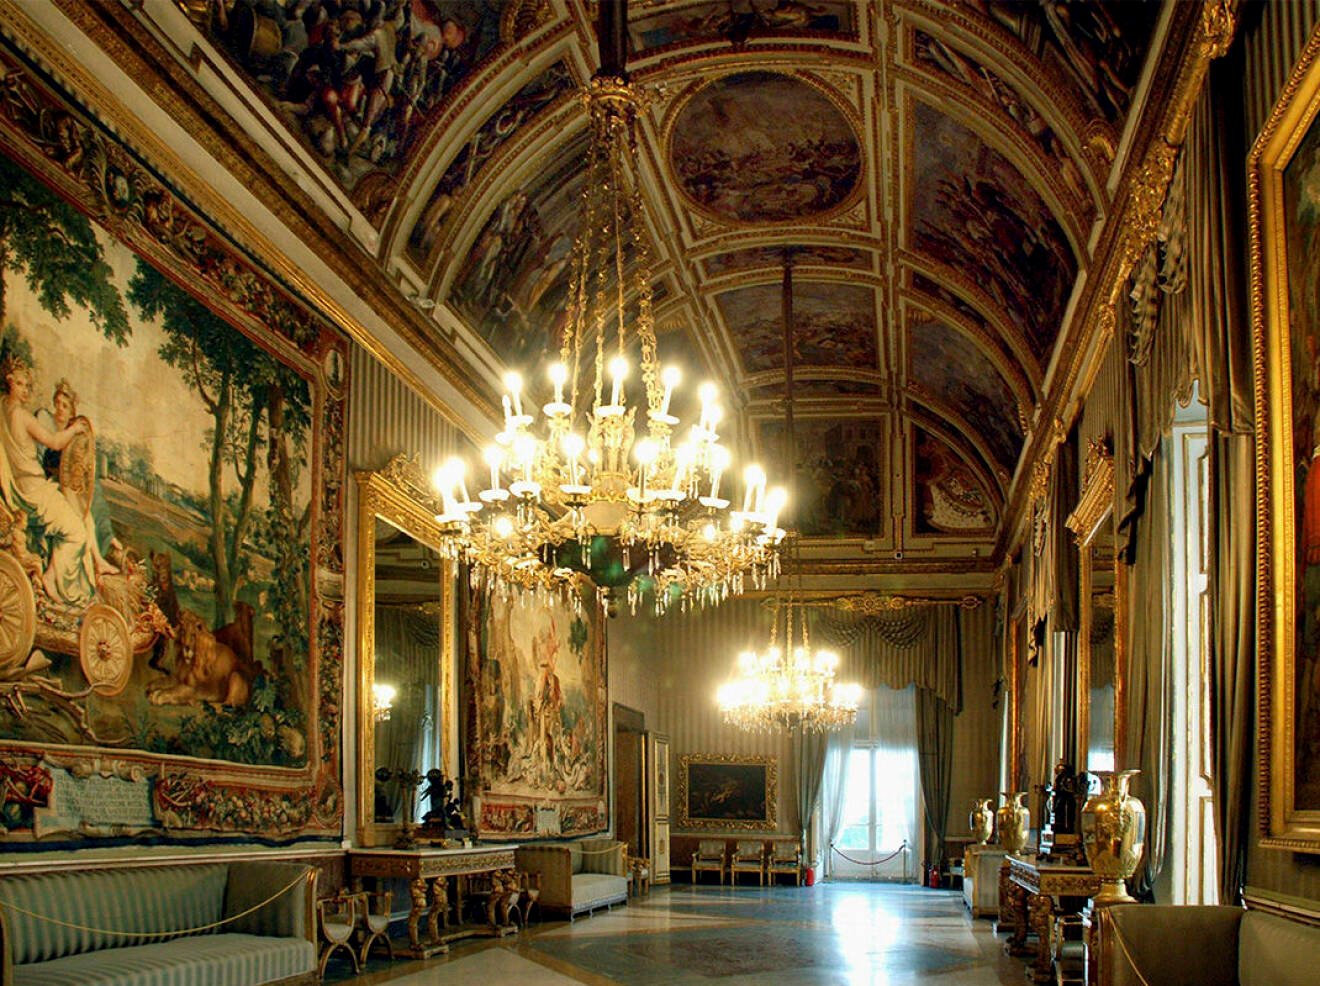 Palazzo Reale i Neapel ligger vackert på Piazza del Plebiscito